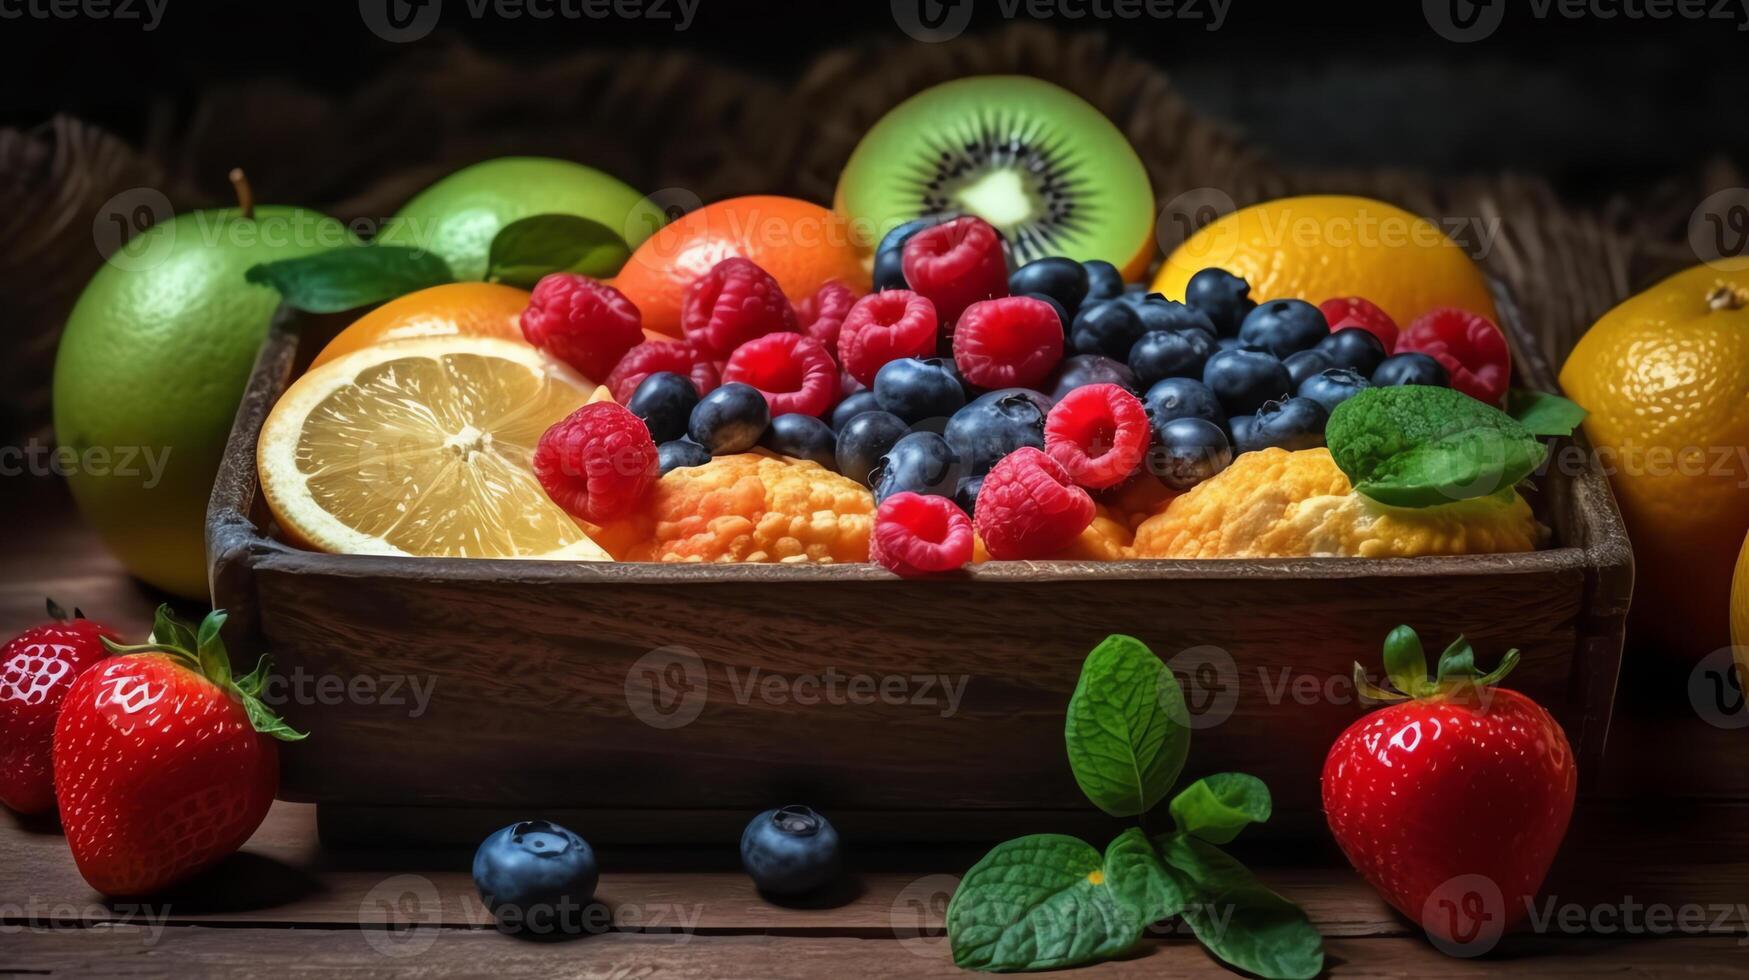 doce fruta dentro engradado vegetariano lanche ai generativo foto